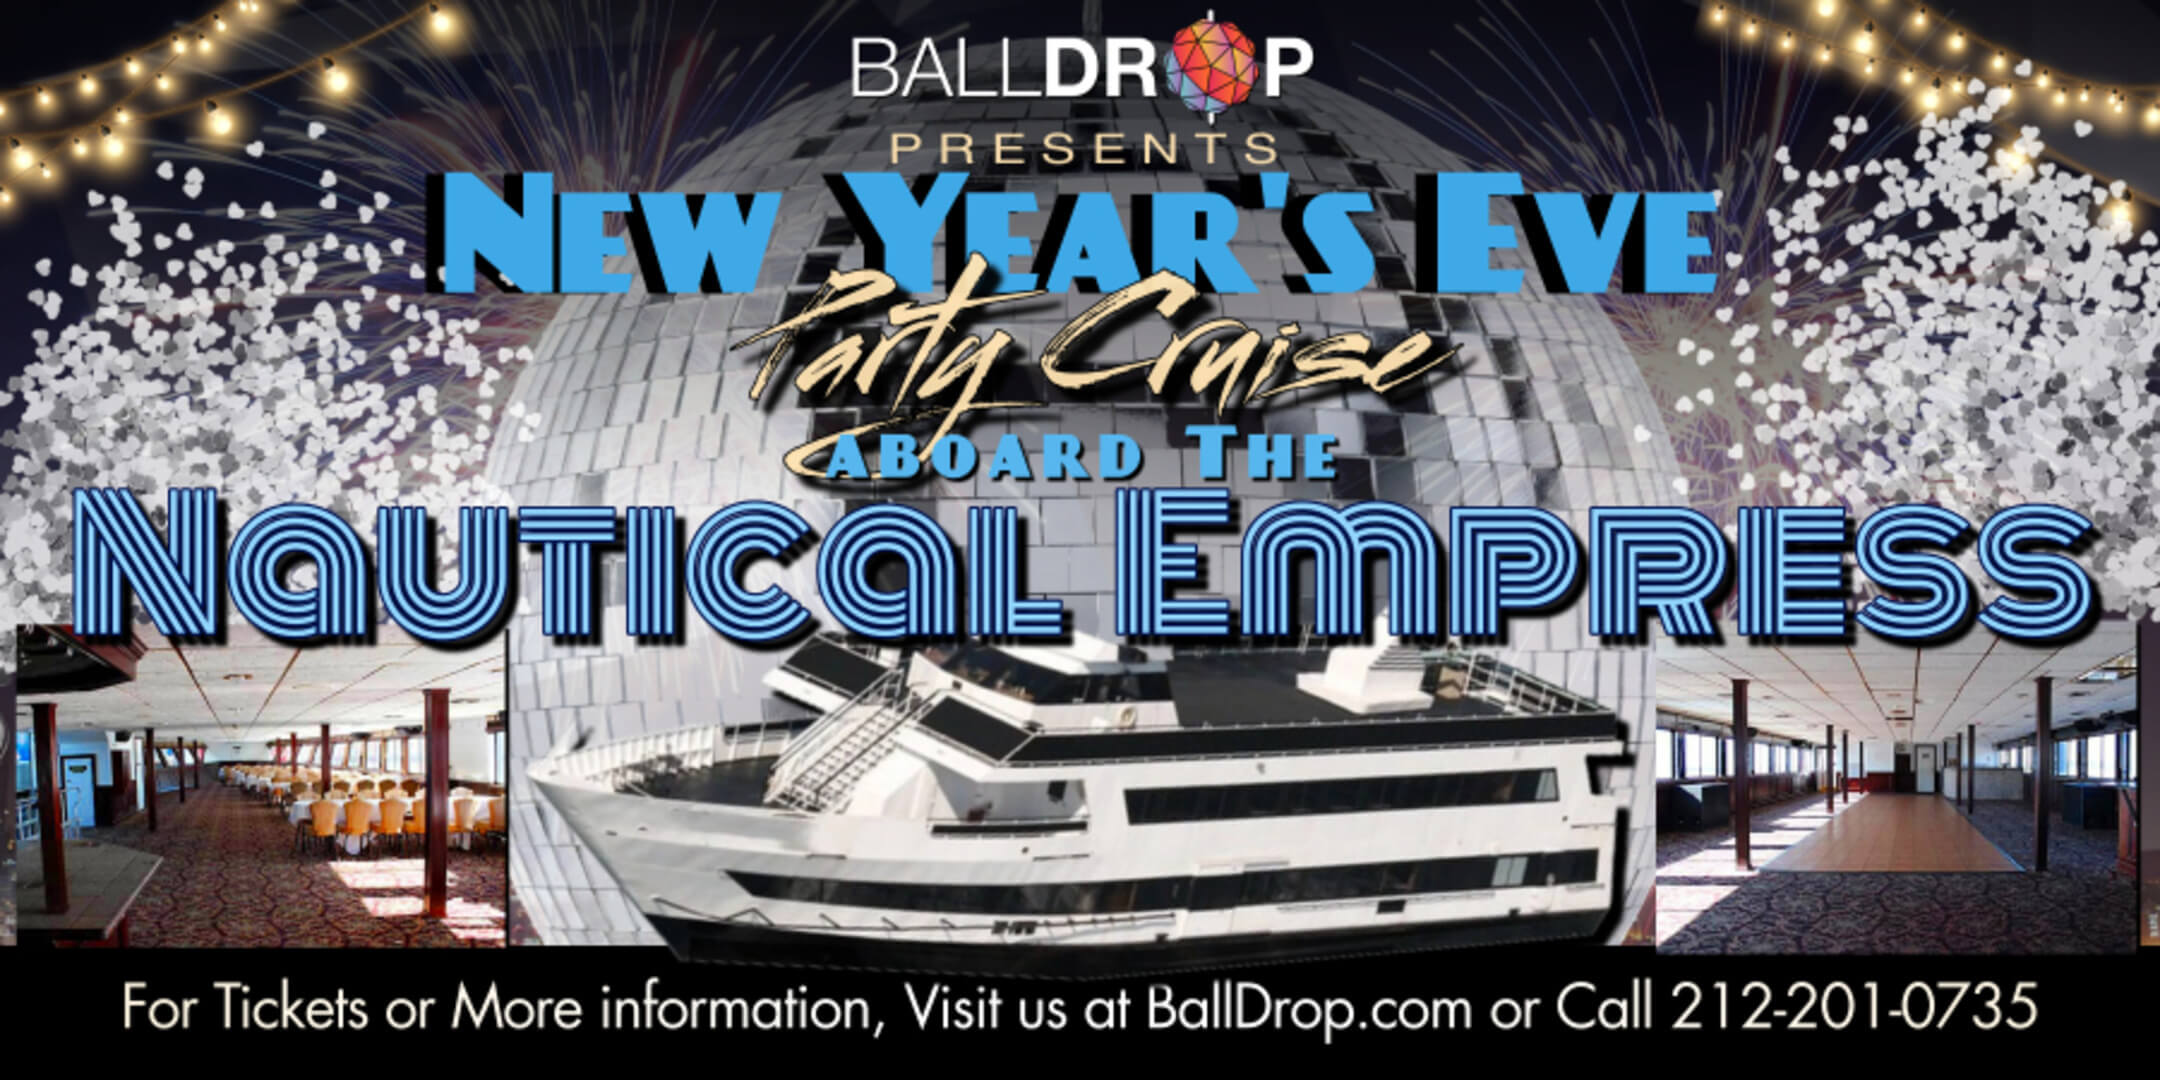 Nautical Empress Yacht NYC